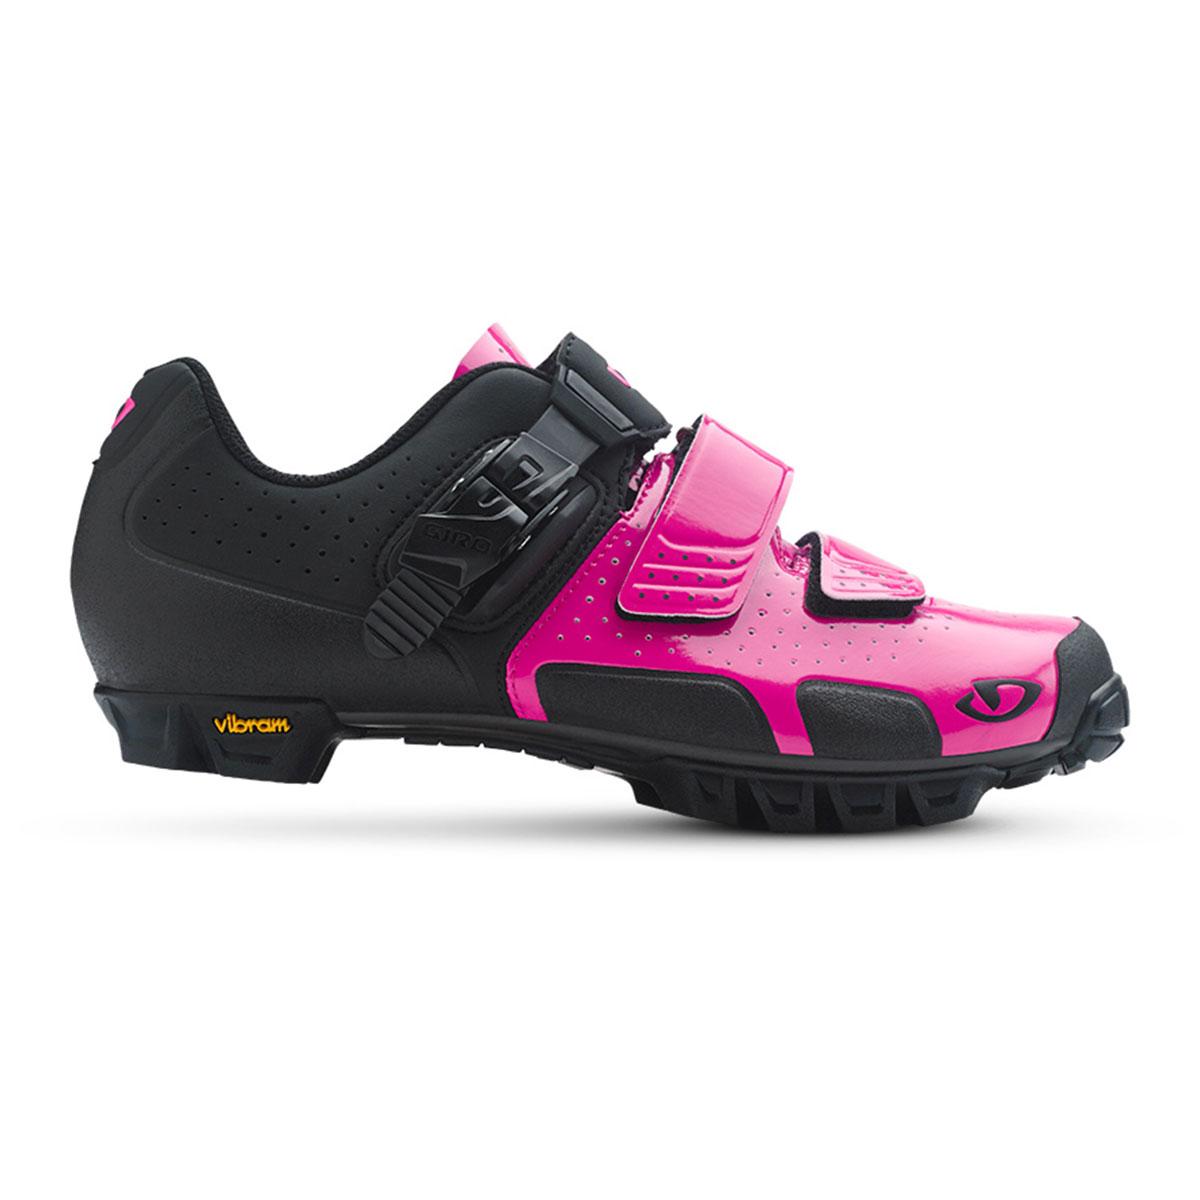 Giro Sica VR70 Women's MTB Shoes